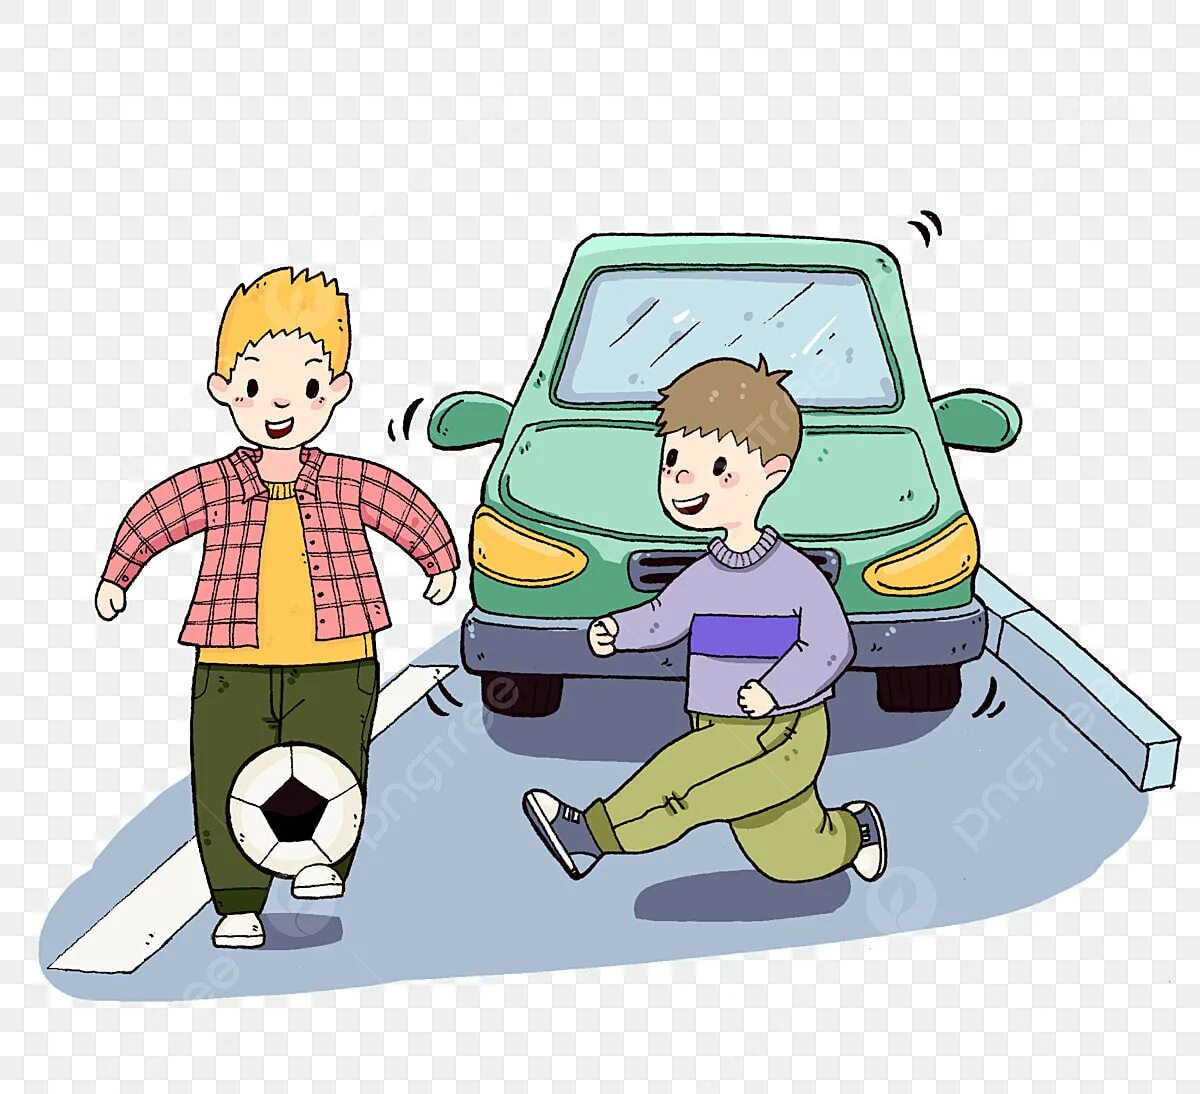 Дети играют на дороге. Ребенок с мячом на дороге. Дети играющие на дороге. Мальчик на дороге.